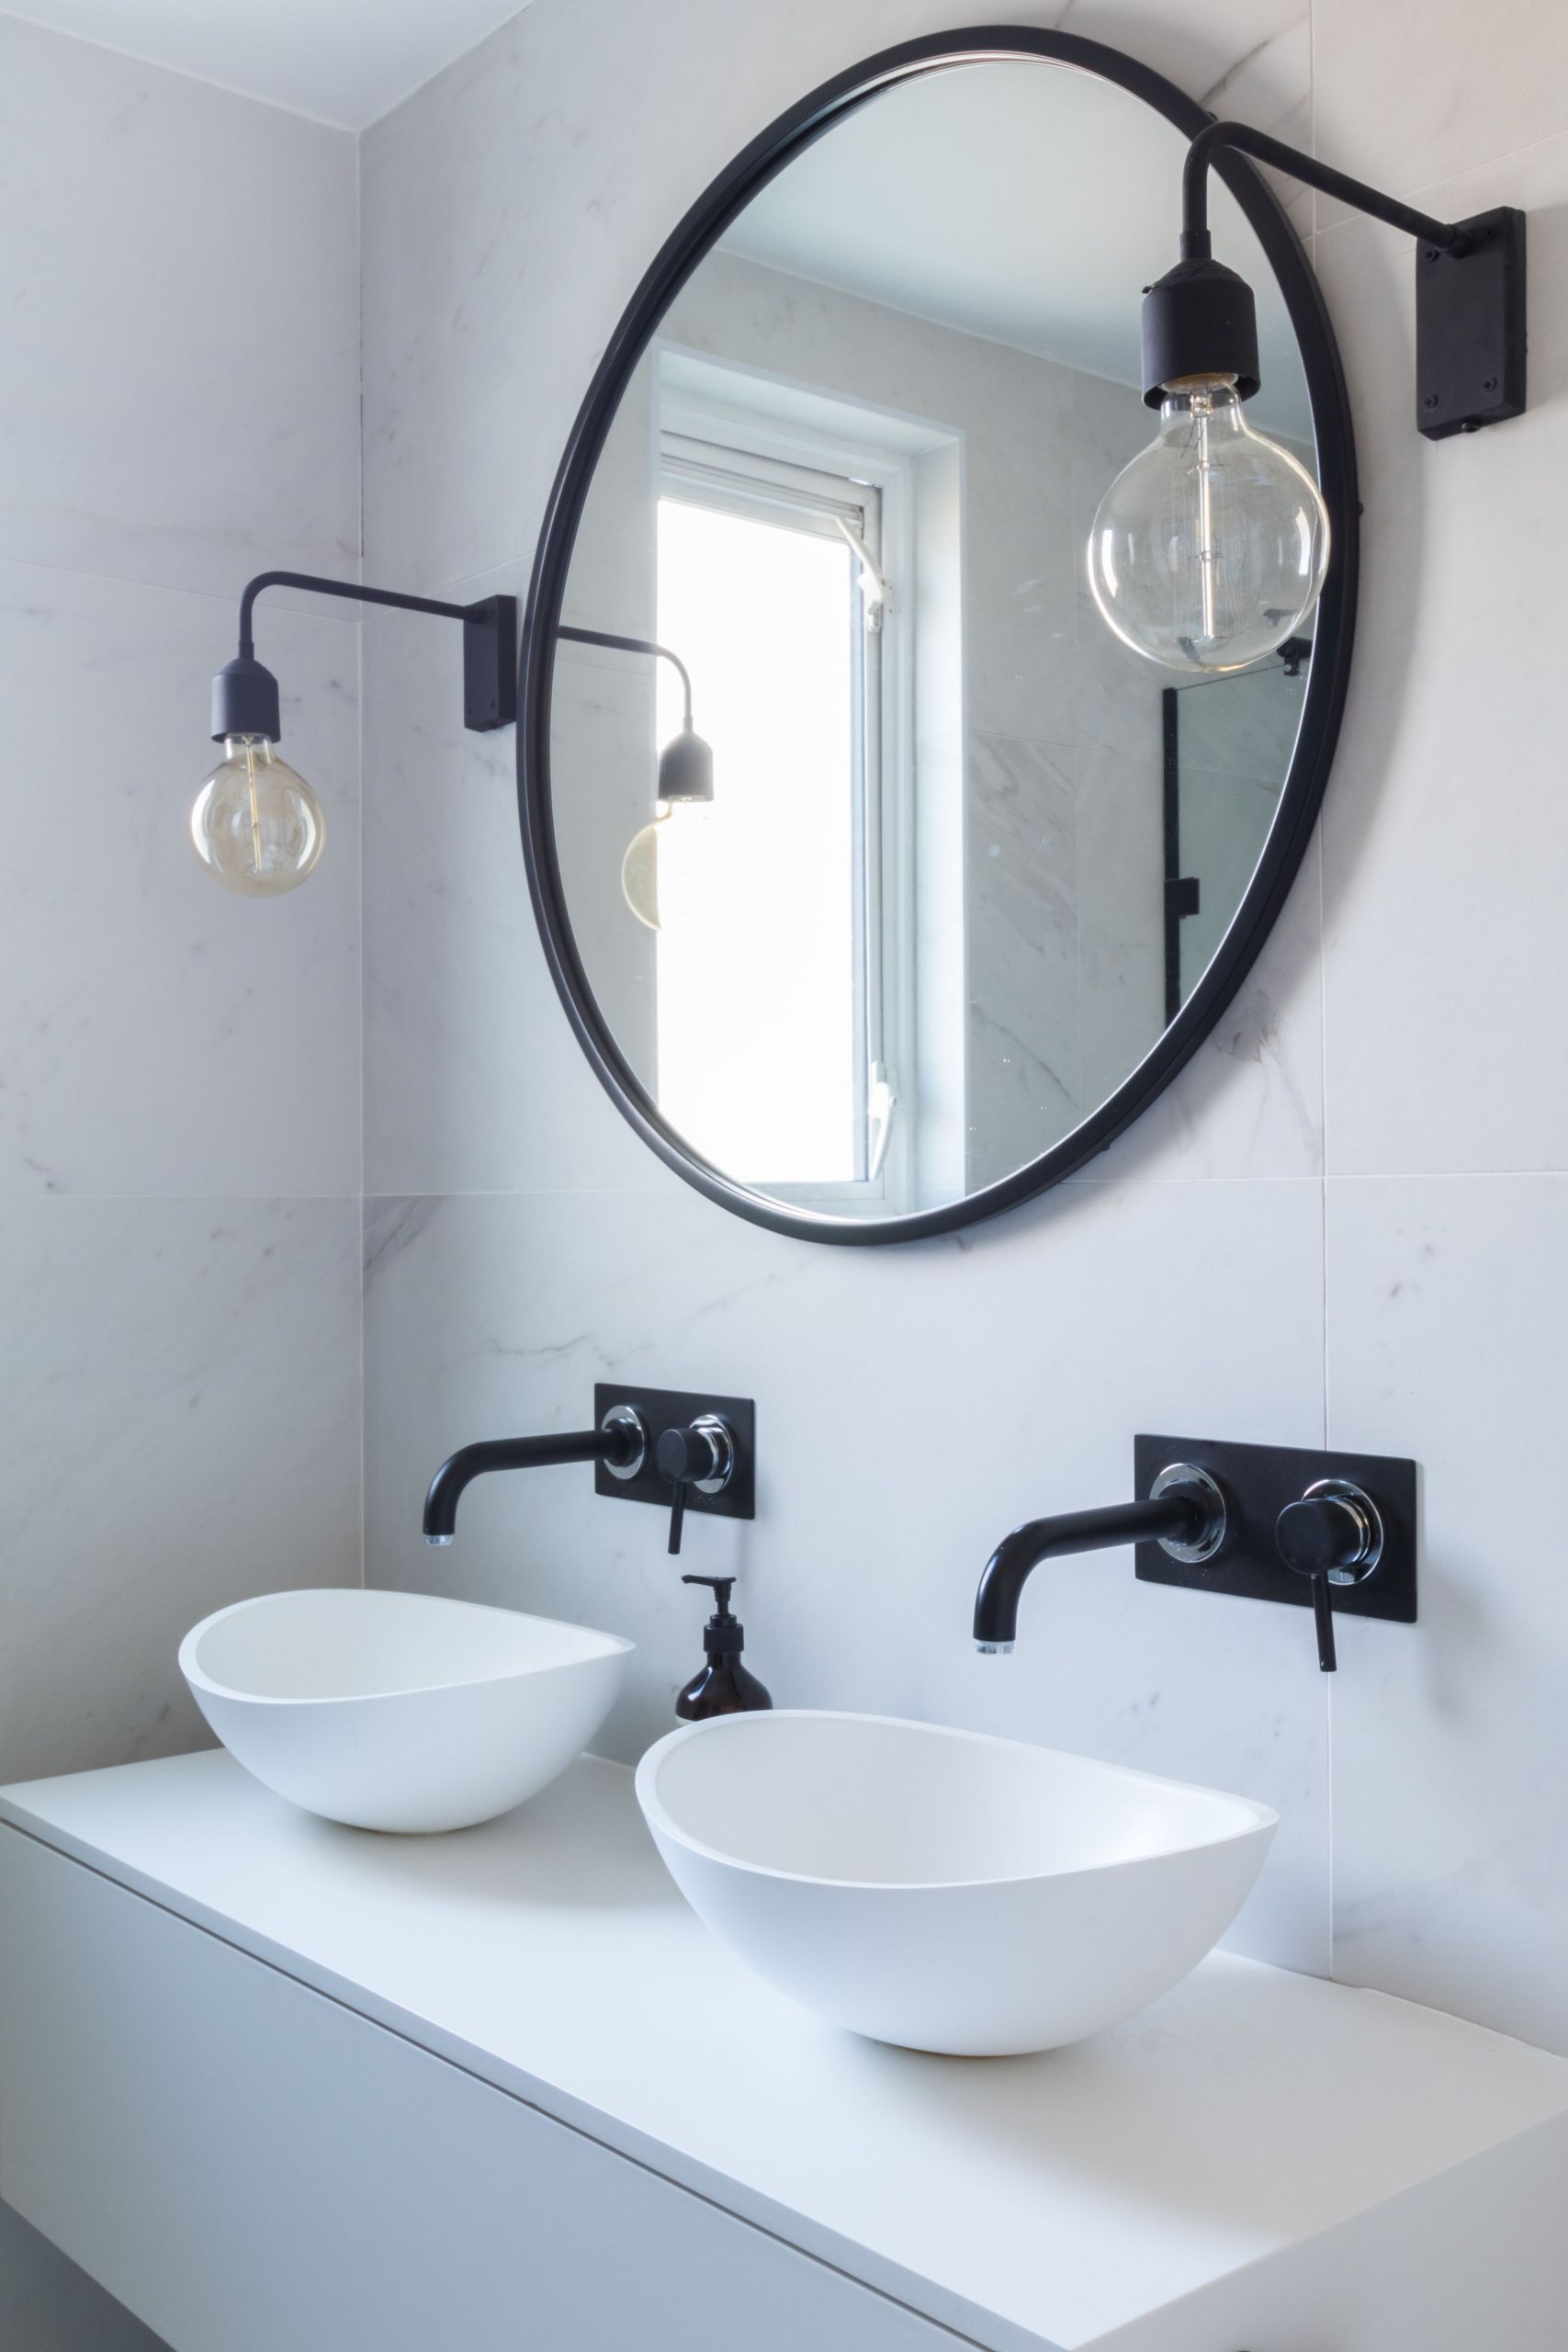 Black Framed Bathroom Mirror
 Bathroom marble tiles marble black and white bathroom